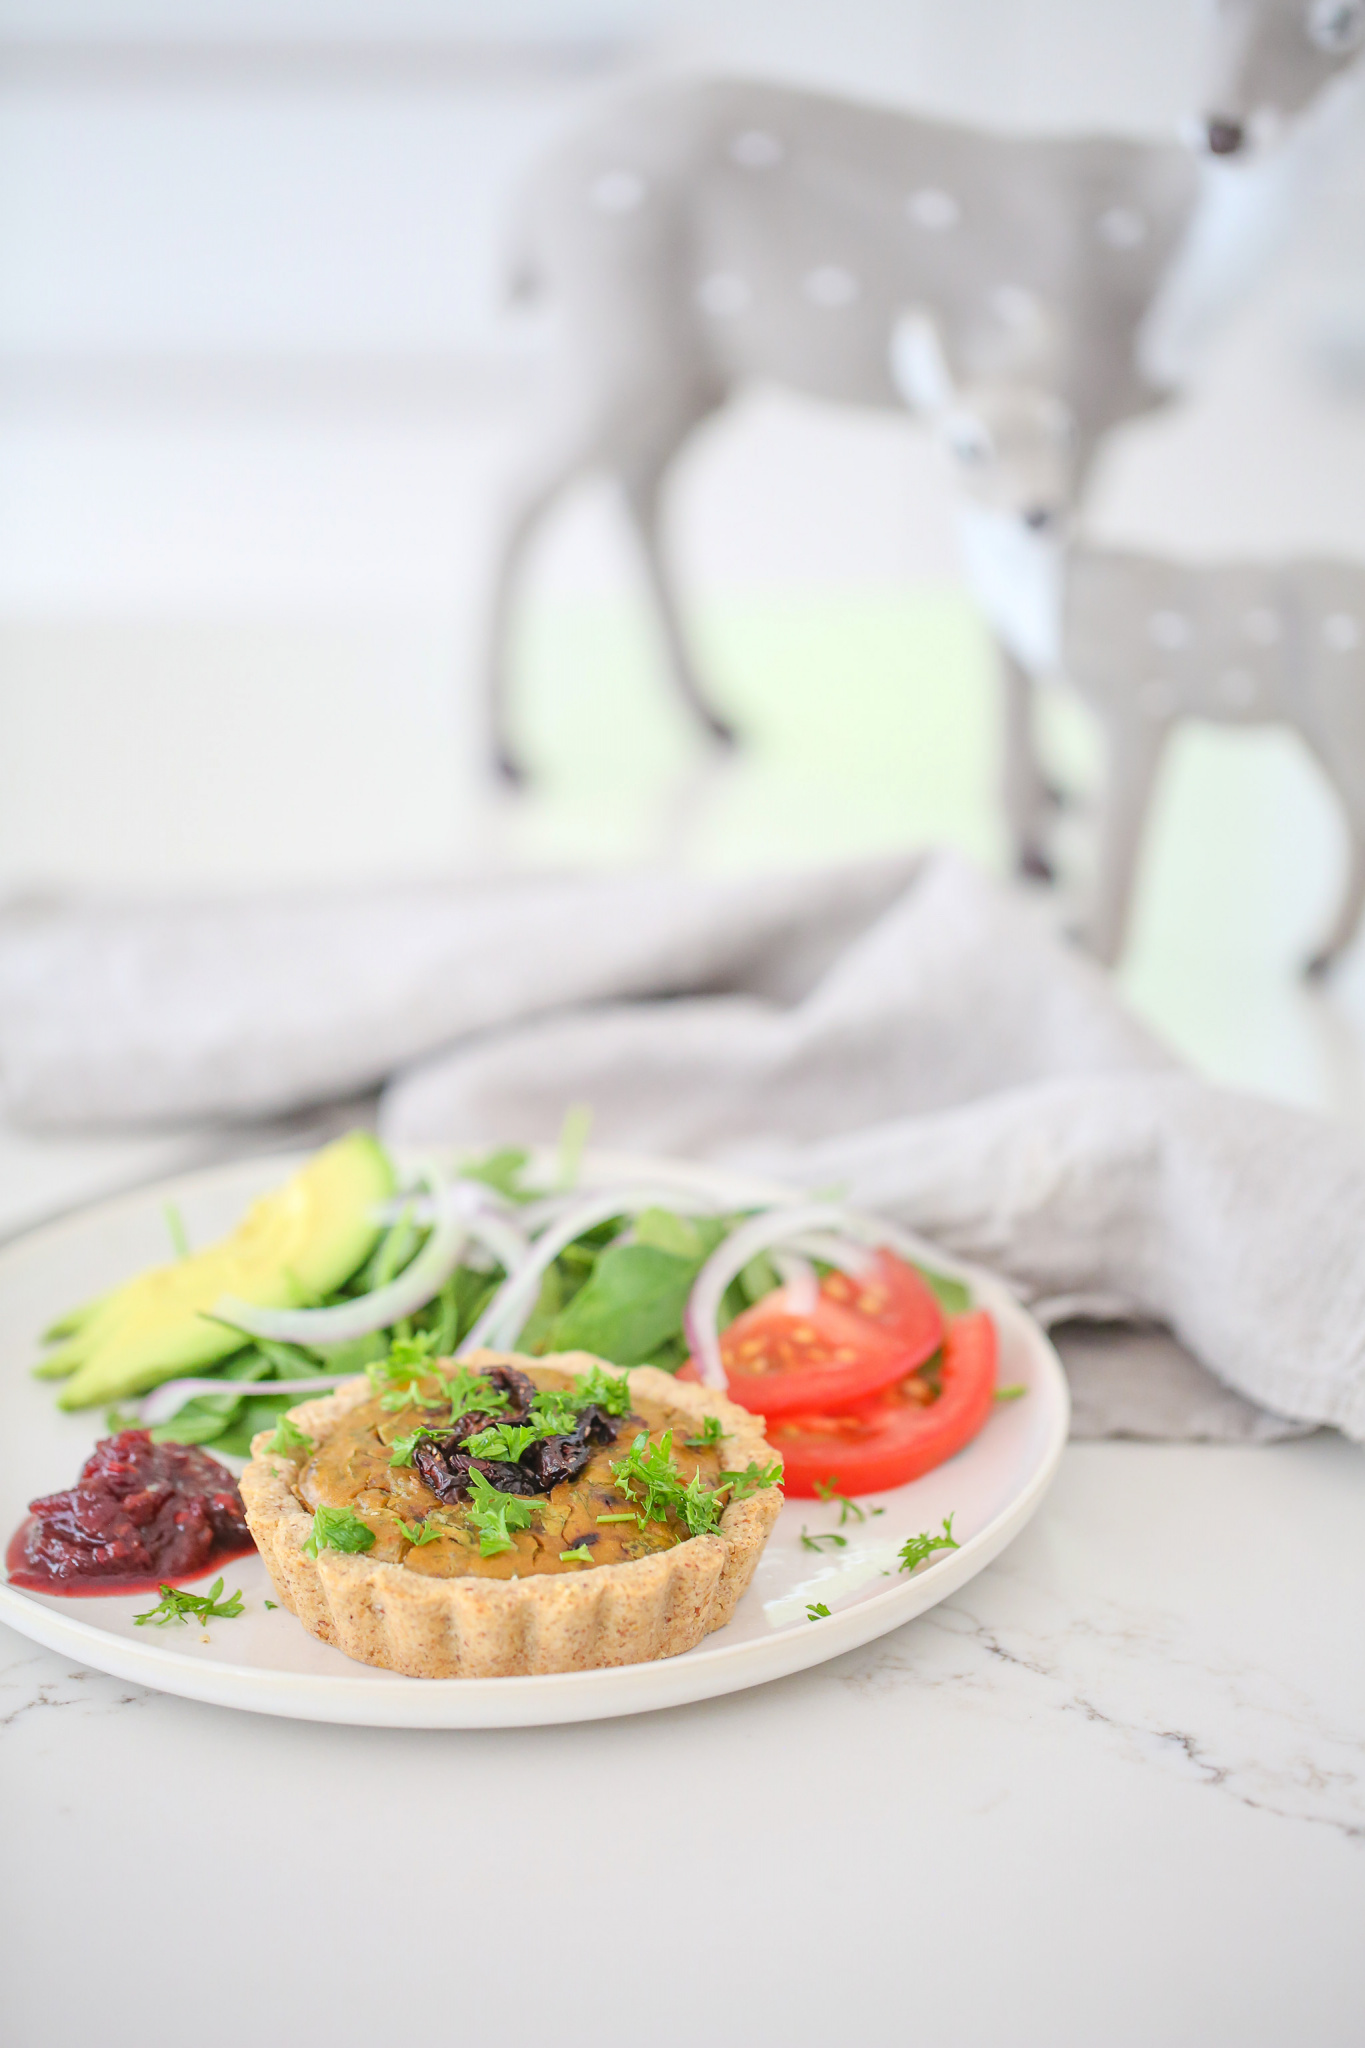 Healthy savoury vegan mini quiche with relish, parsley, salad, red onion, tomato, avocado